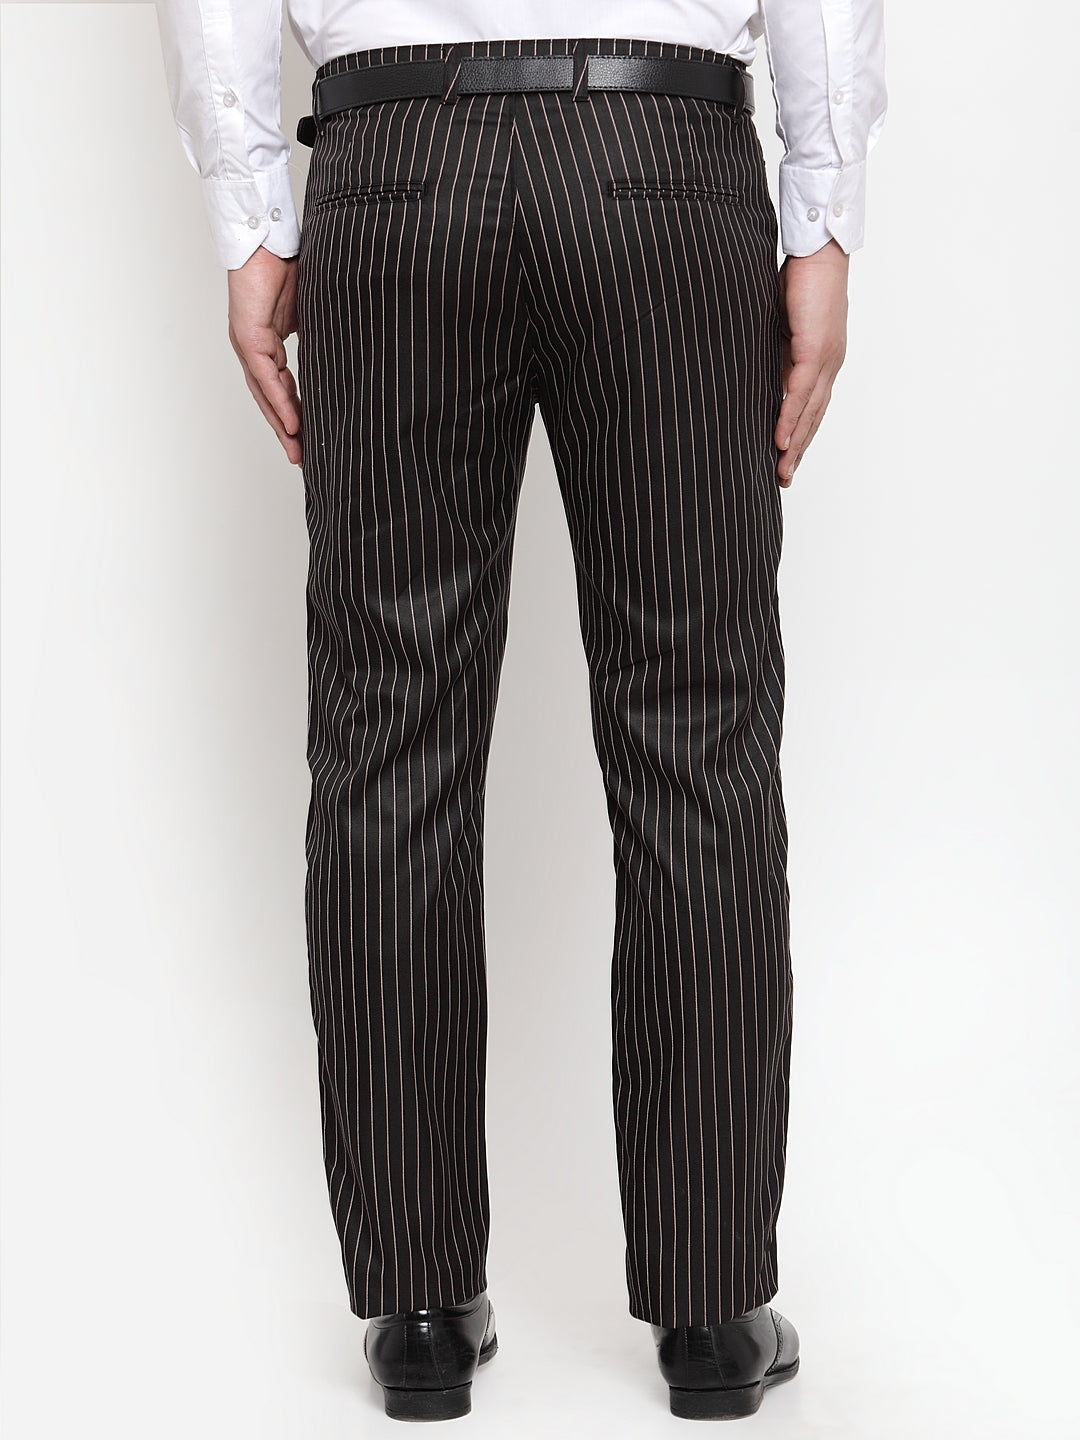 Jainish Men's Black Cotton Striped Formal Trousers